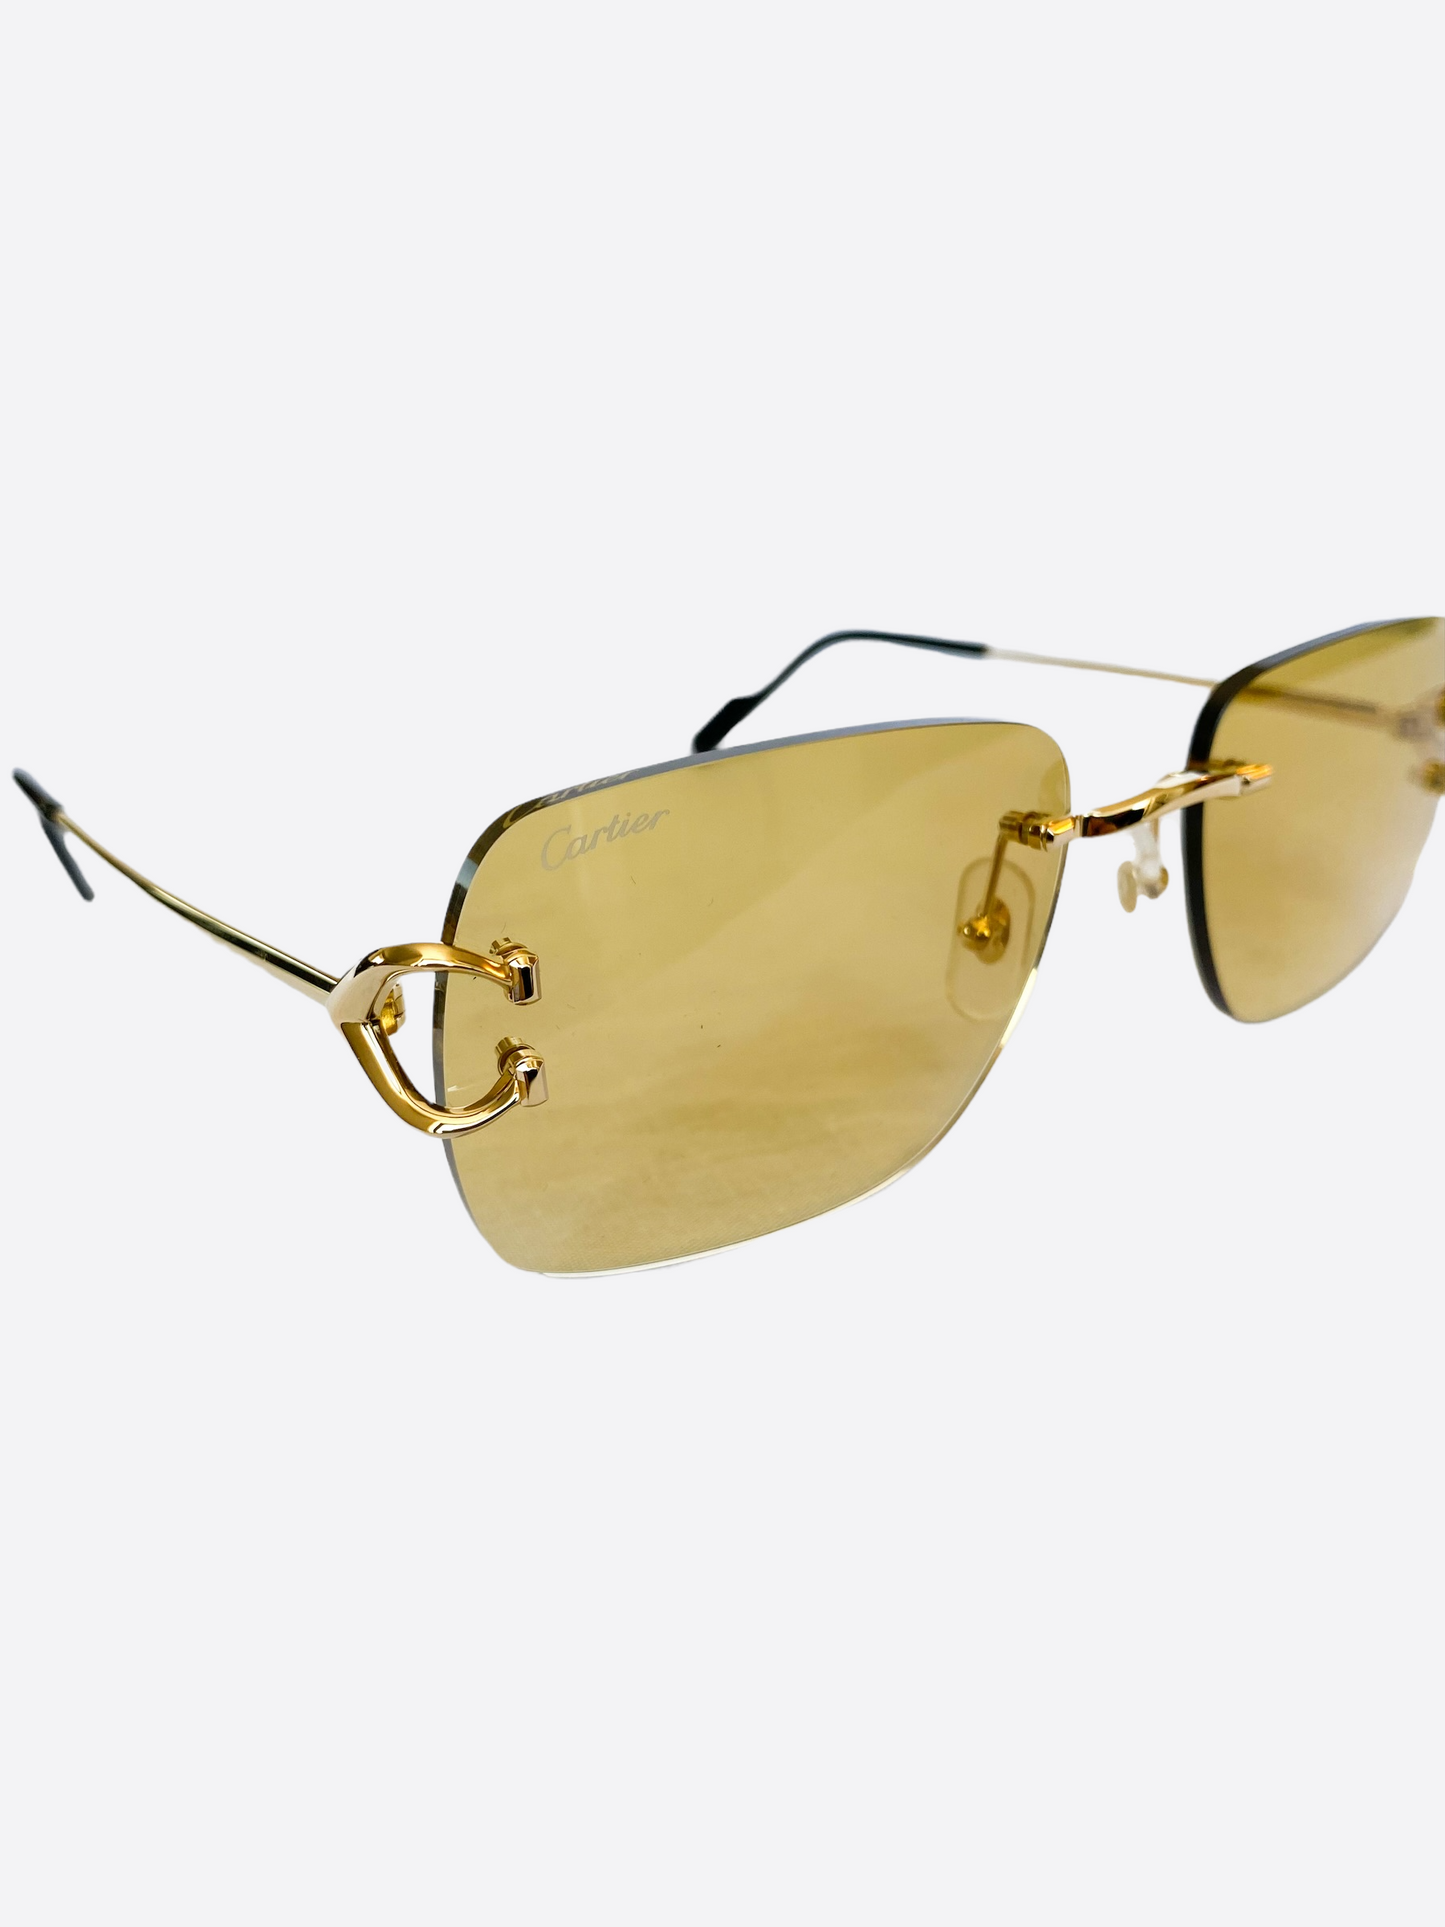 Cartier Yellow Lens Gold Metal Sunglasses